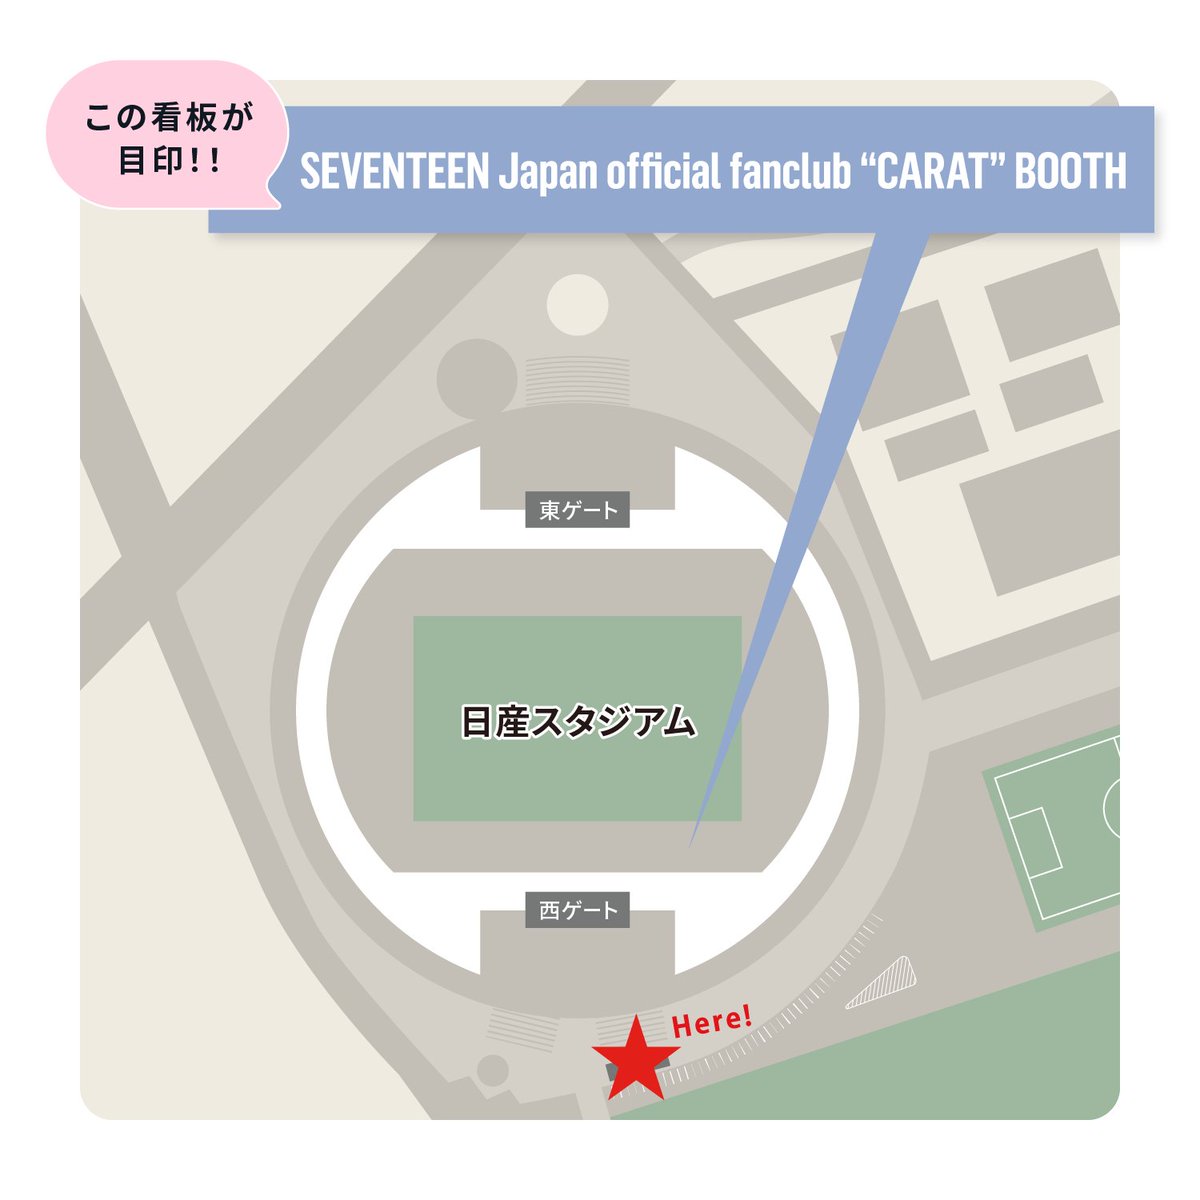 [#SEVENTEEN JAPAN NEWS] 『SEVENTEEN TOUR 'FOLLOW' AGAIN TO JAPAN』[神奈川公演] 'CARAT'ブース 新規会員登録＆更新キャンペーン 予約受付中→seventeen-17.jp/r/687610 🚨運営時間：10:00～17:00(JST) 🚨整列受付：ご予約時間枠 開始10分前～終了15分前 #SVT_TOUR_FOLLOW_AGAIN #FOLLOW_AGAIN